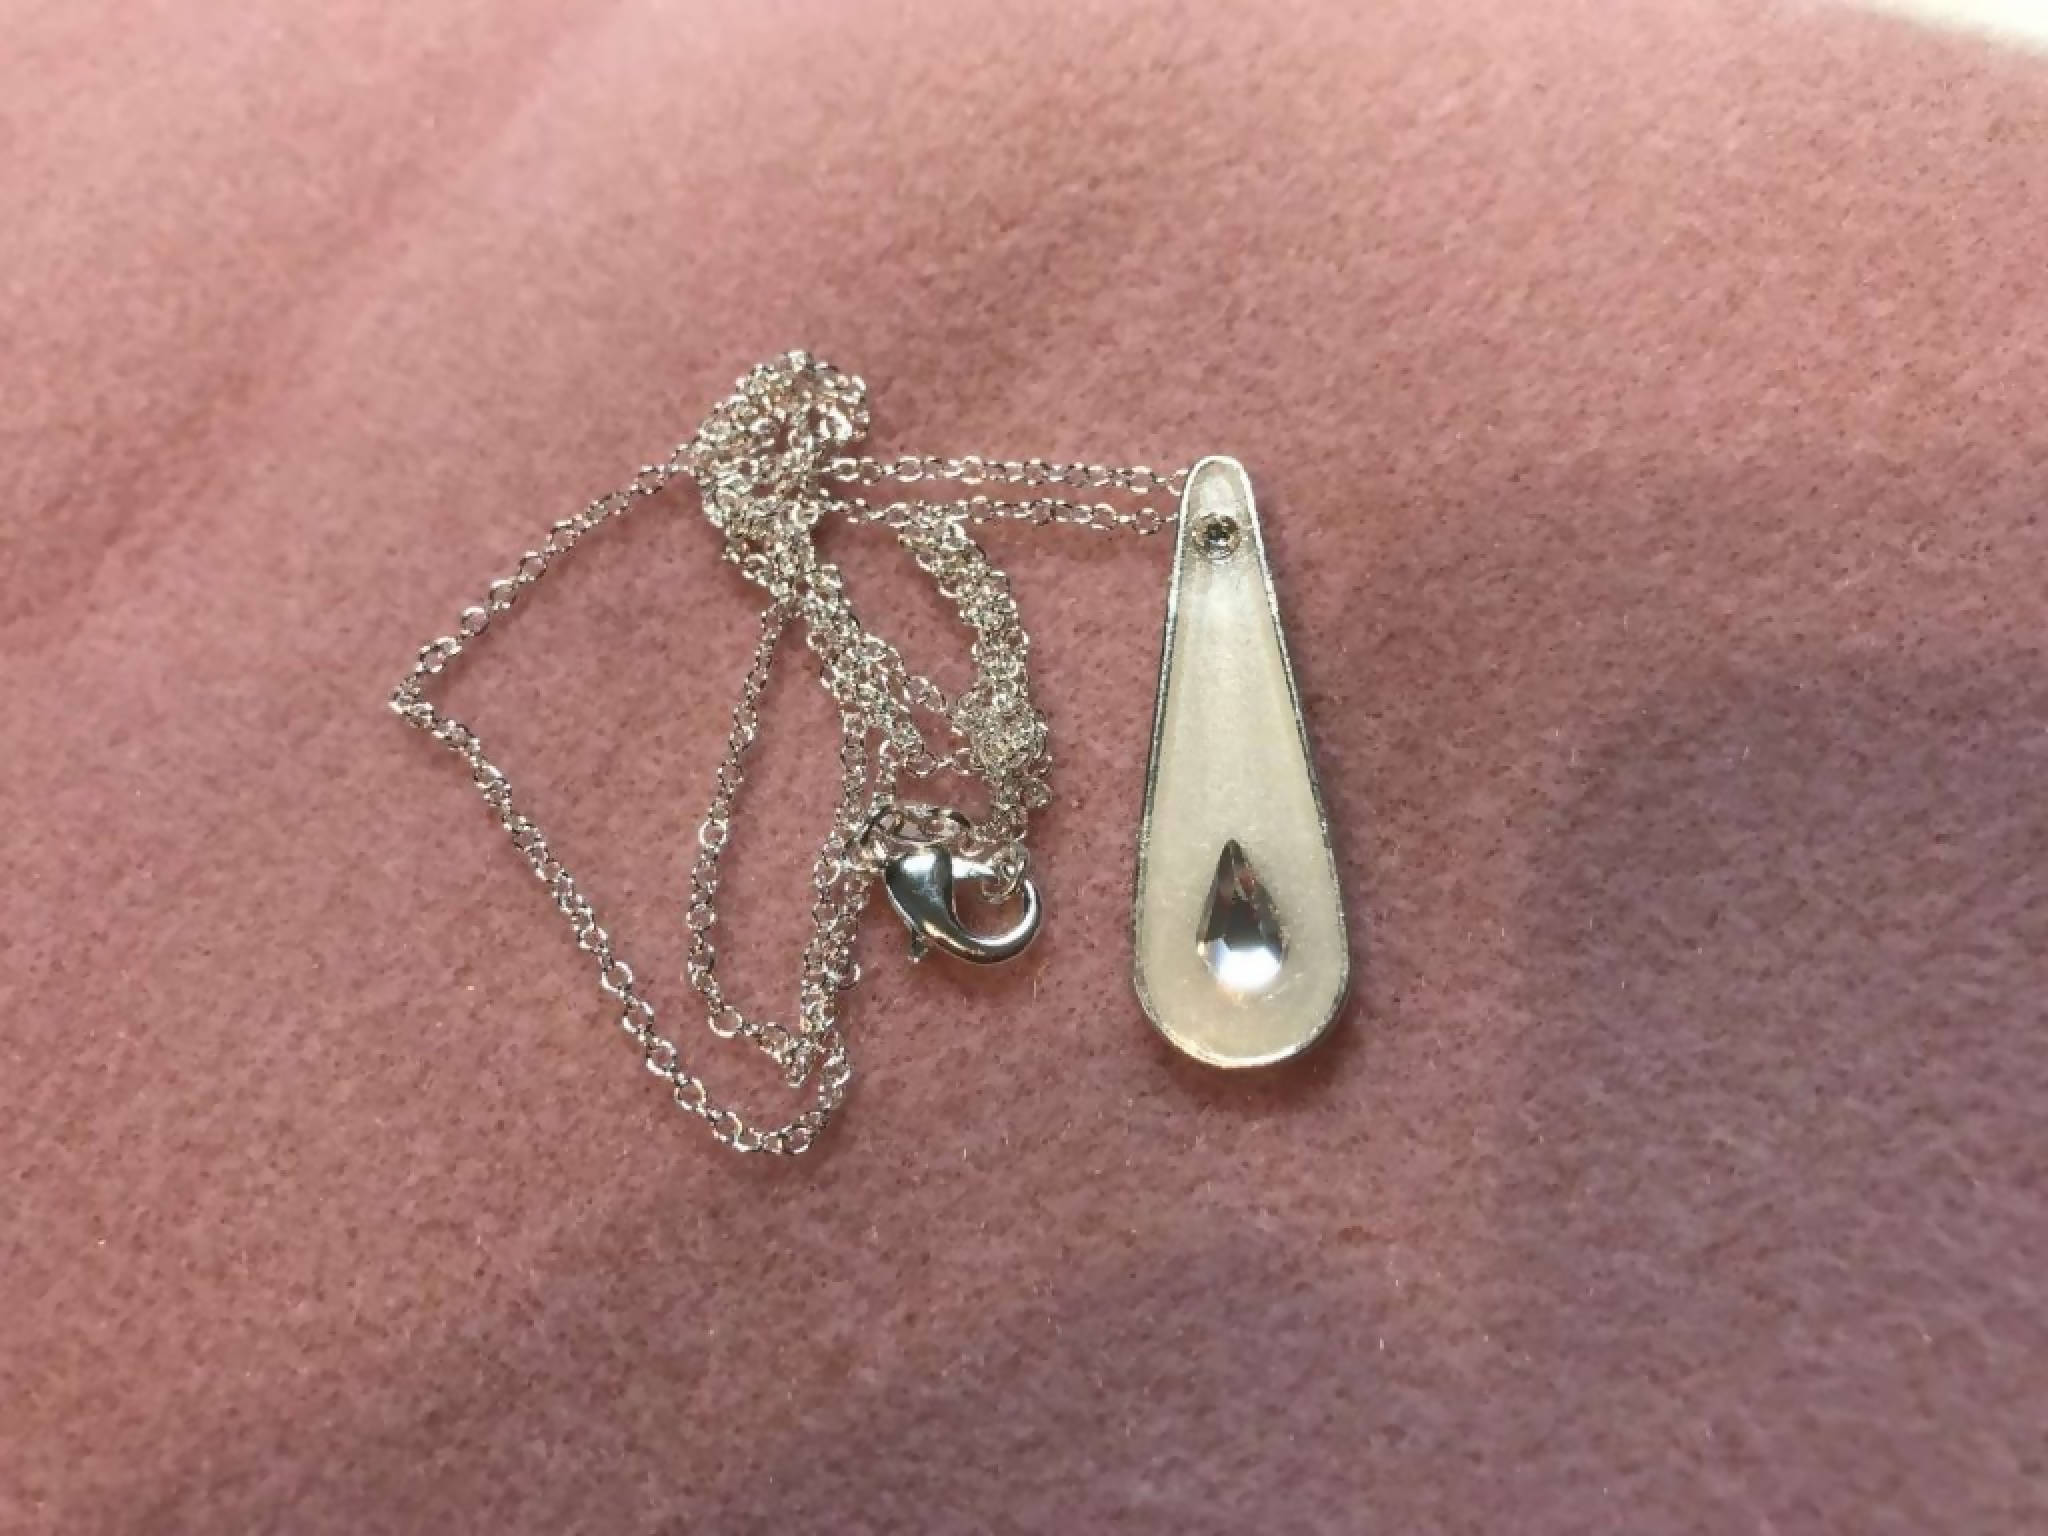 Handmade bespoke Silver Resin & Swarovski Crystal Teardrop Necklace